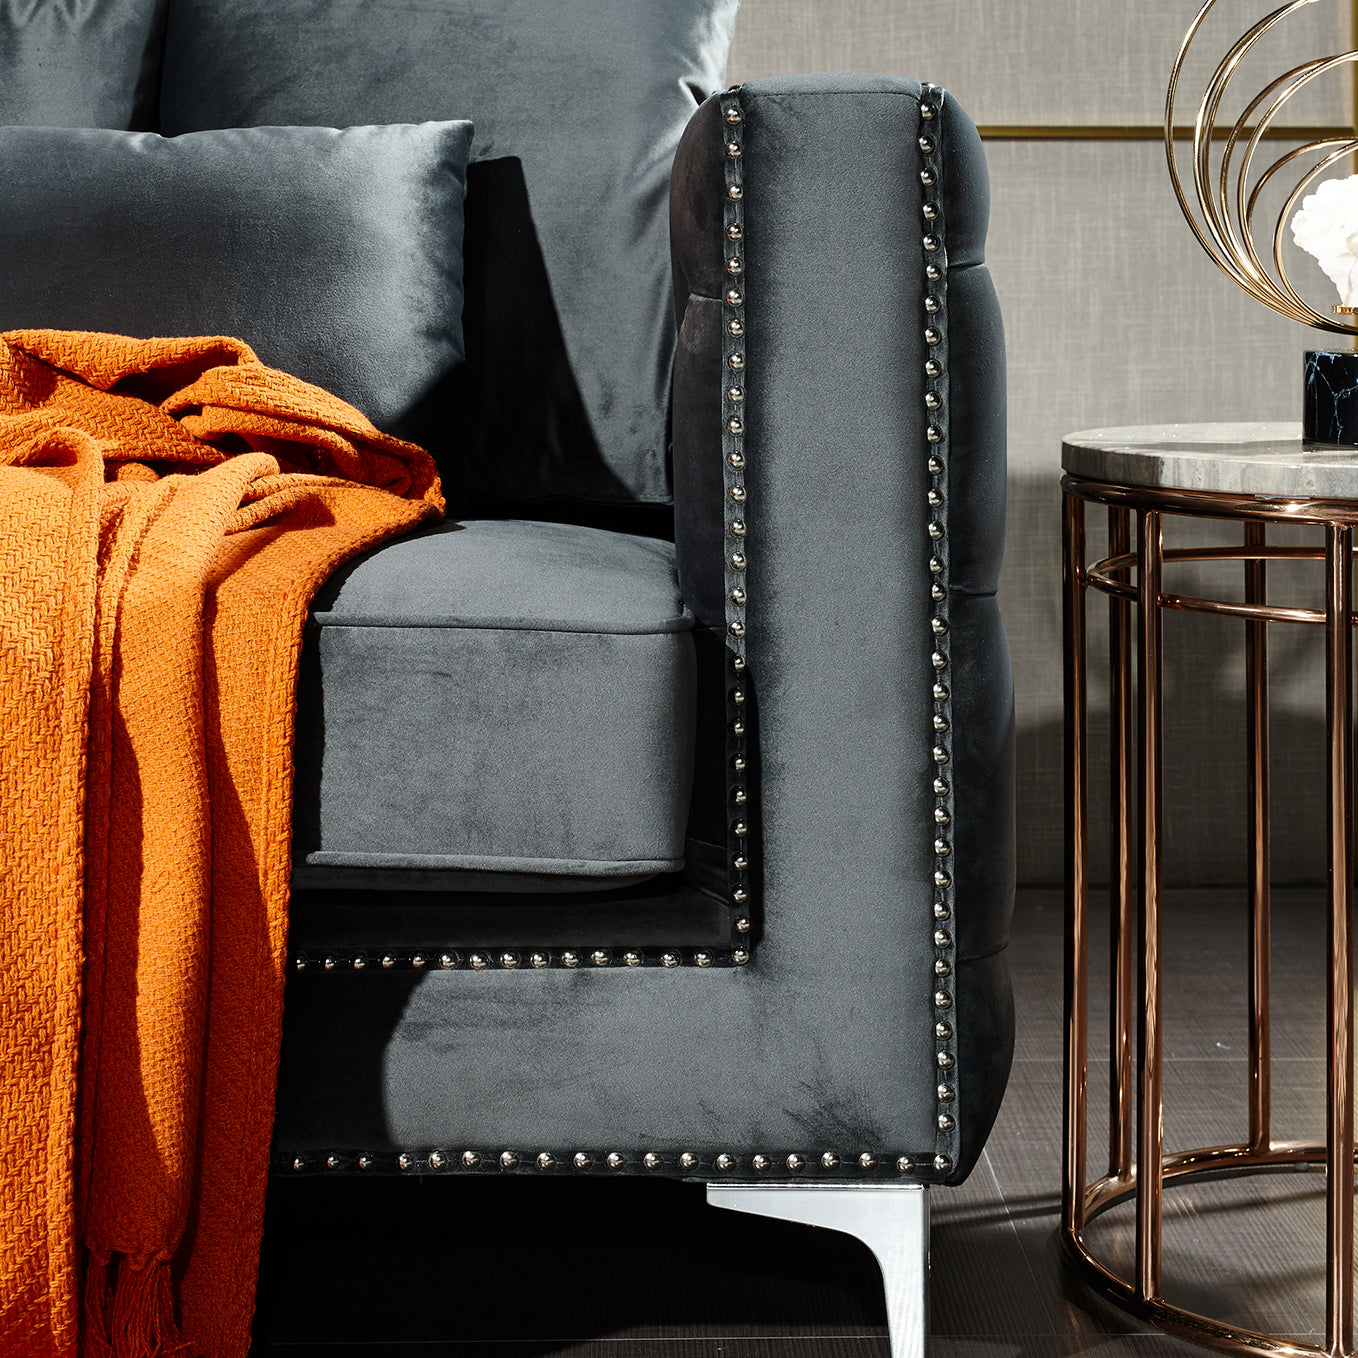 3-Pieces  Modern Metal Style Sofa Set, Dark Gray